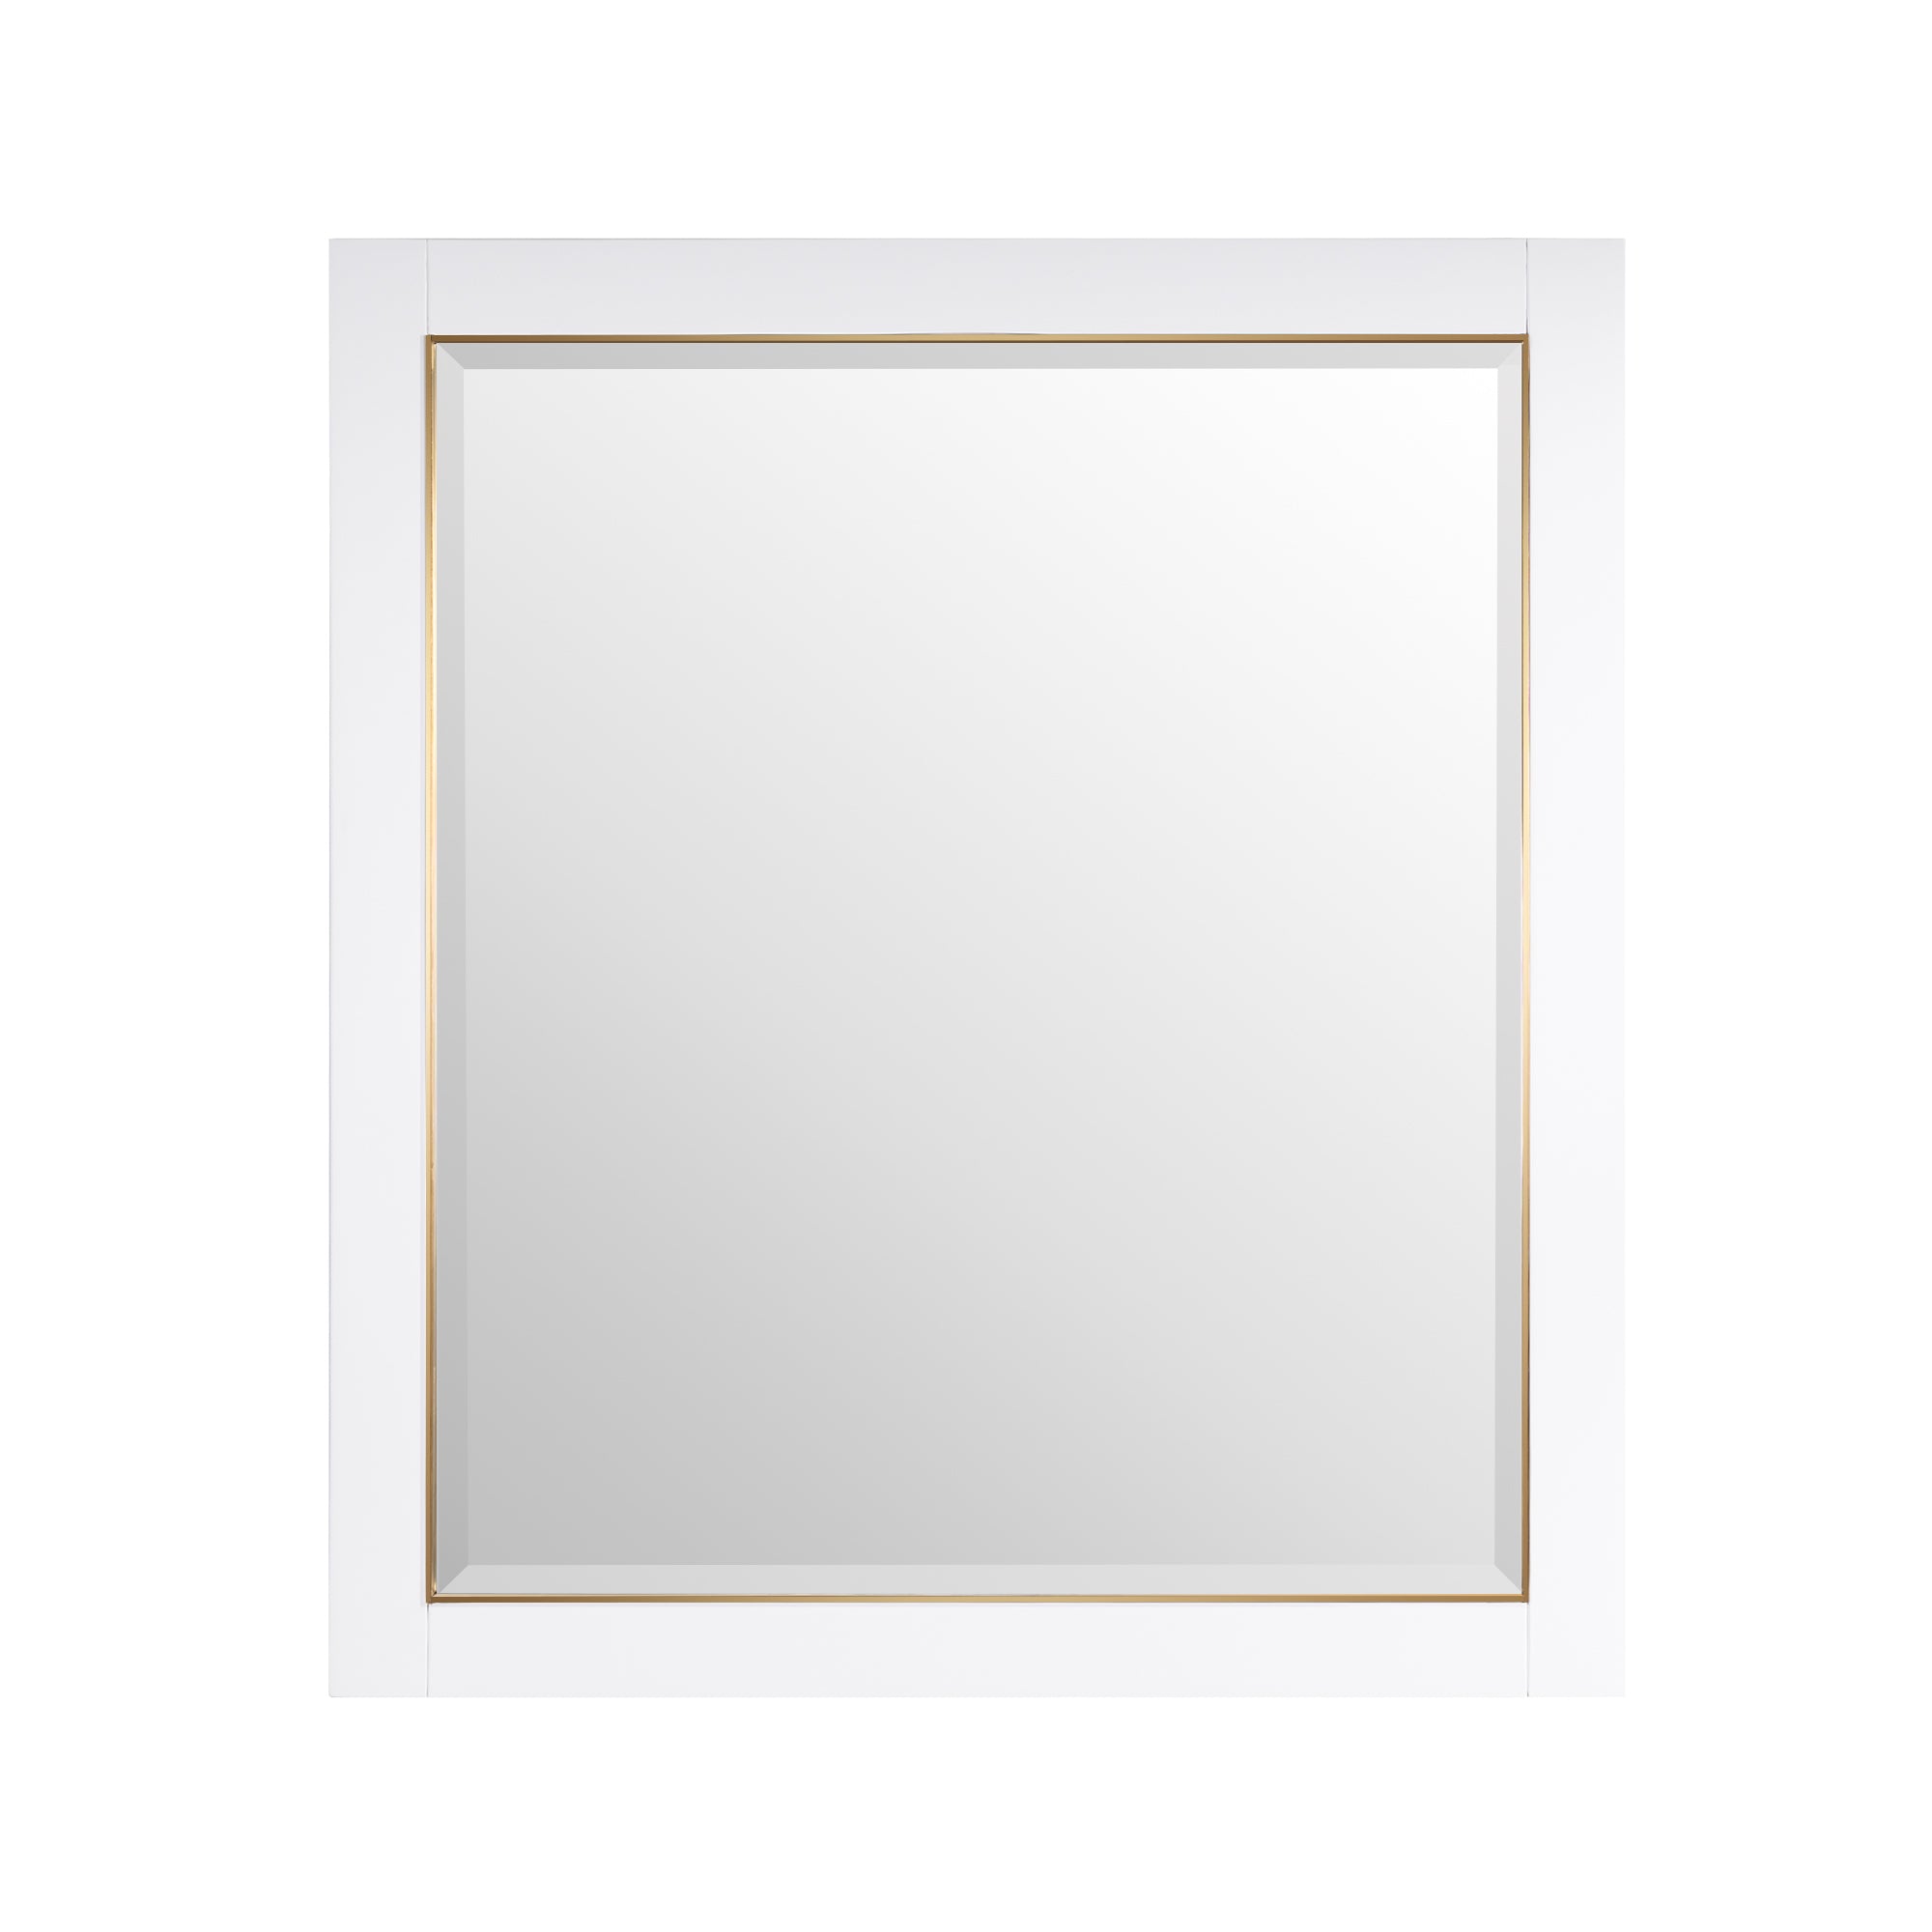 28 in. W x 32 in. H Framed Rectangular Beveled Edge Bathroom Vanity Mirror-Arrisea